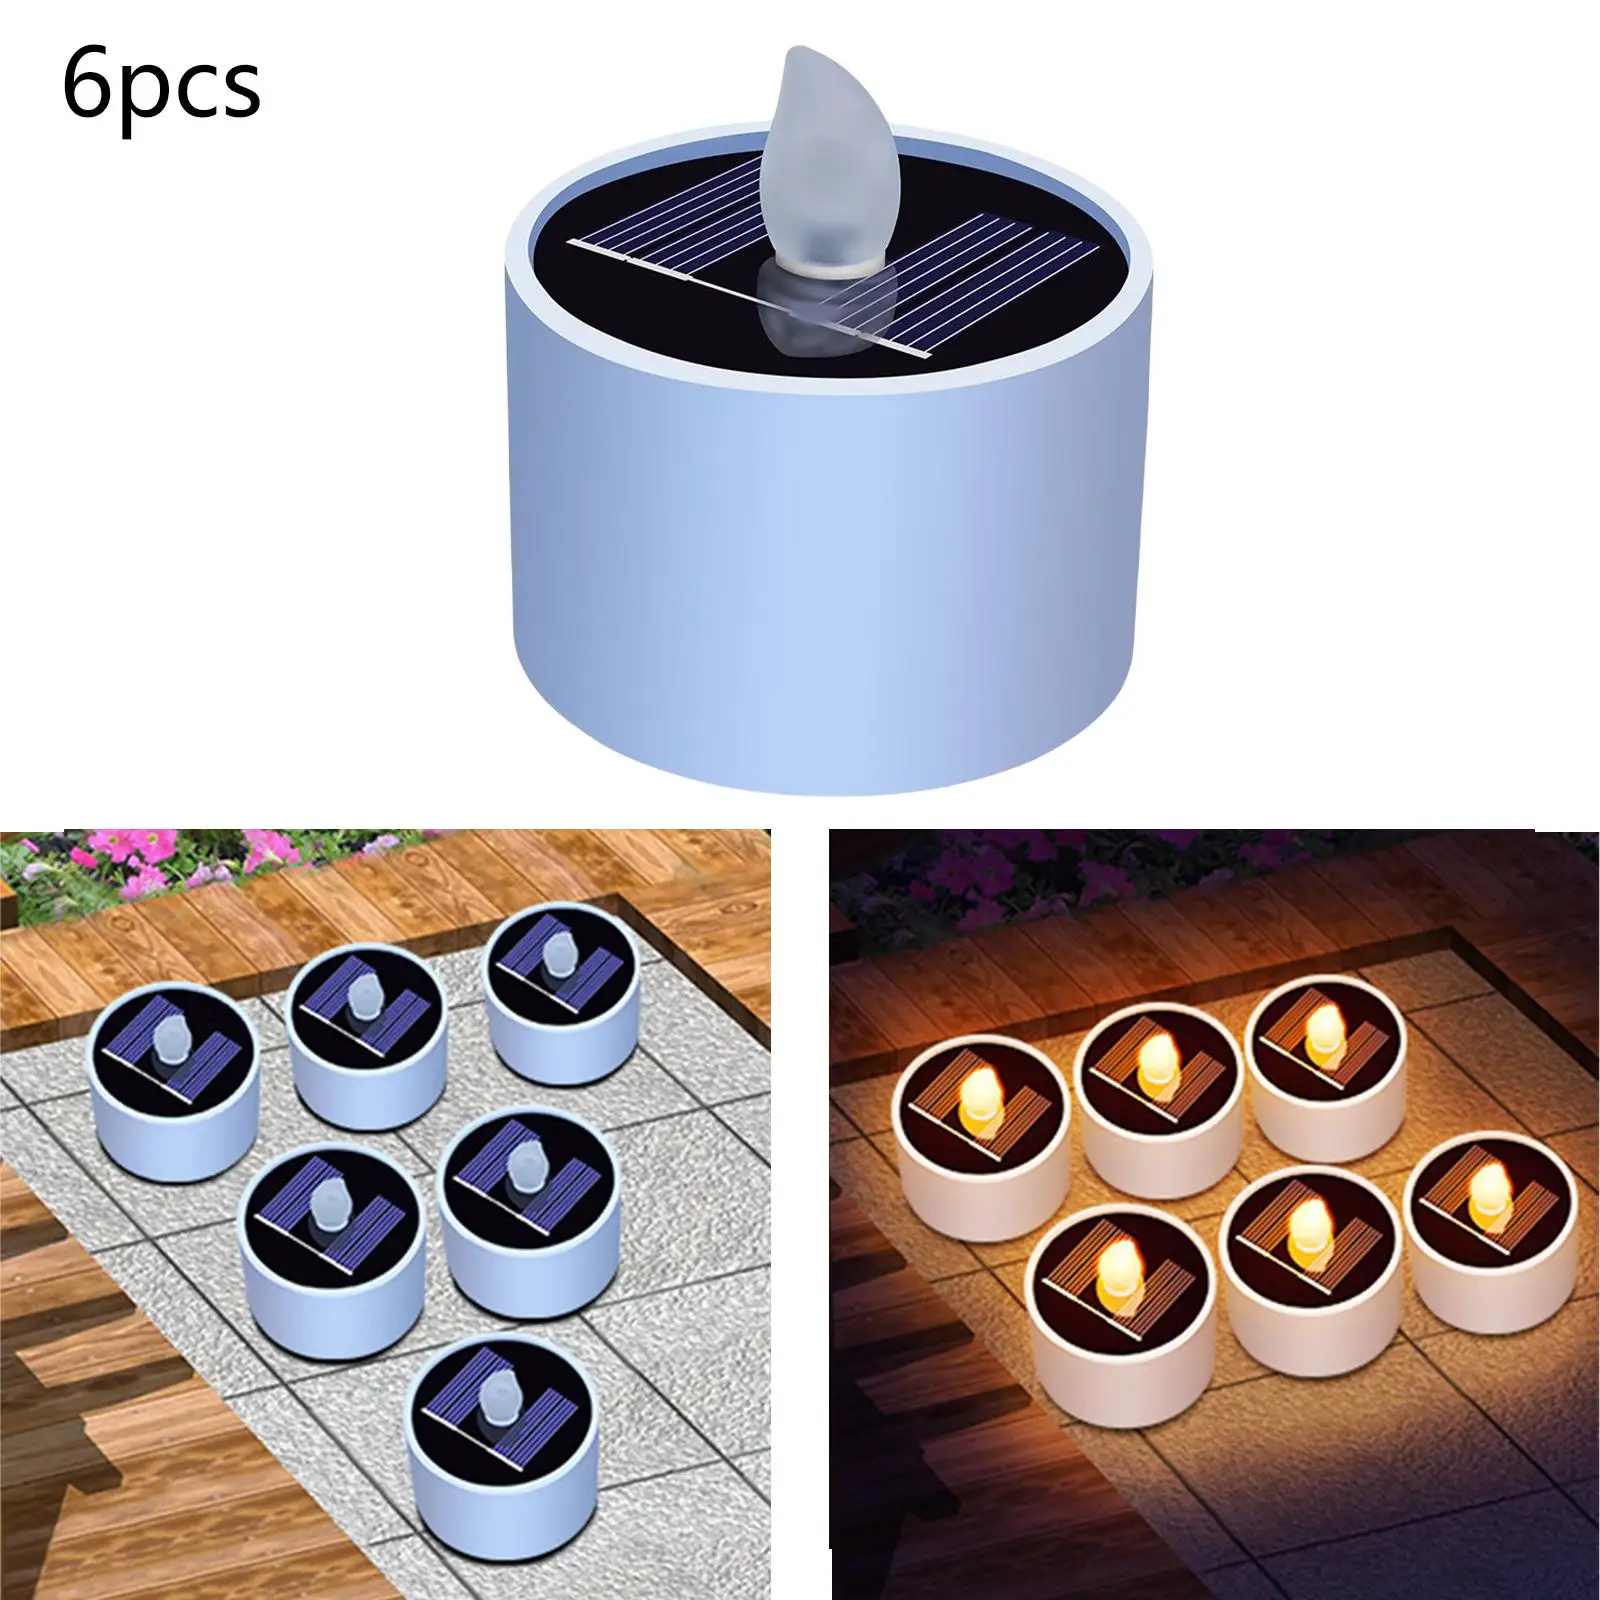 Flameless LED Tea Lights Votive Candles Lamp for Celebration Outdoor Home Party Garden